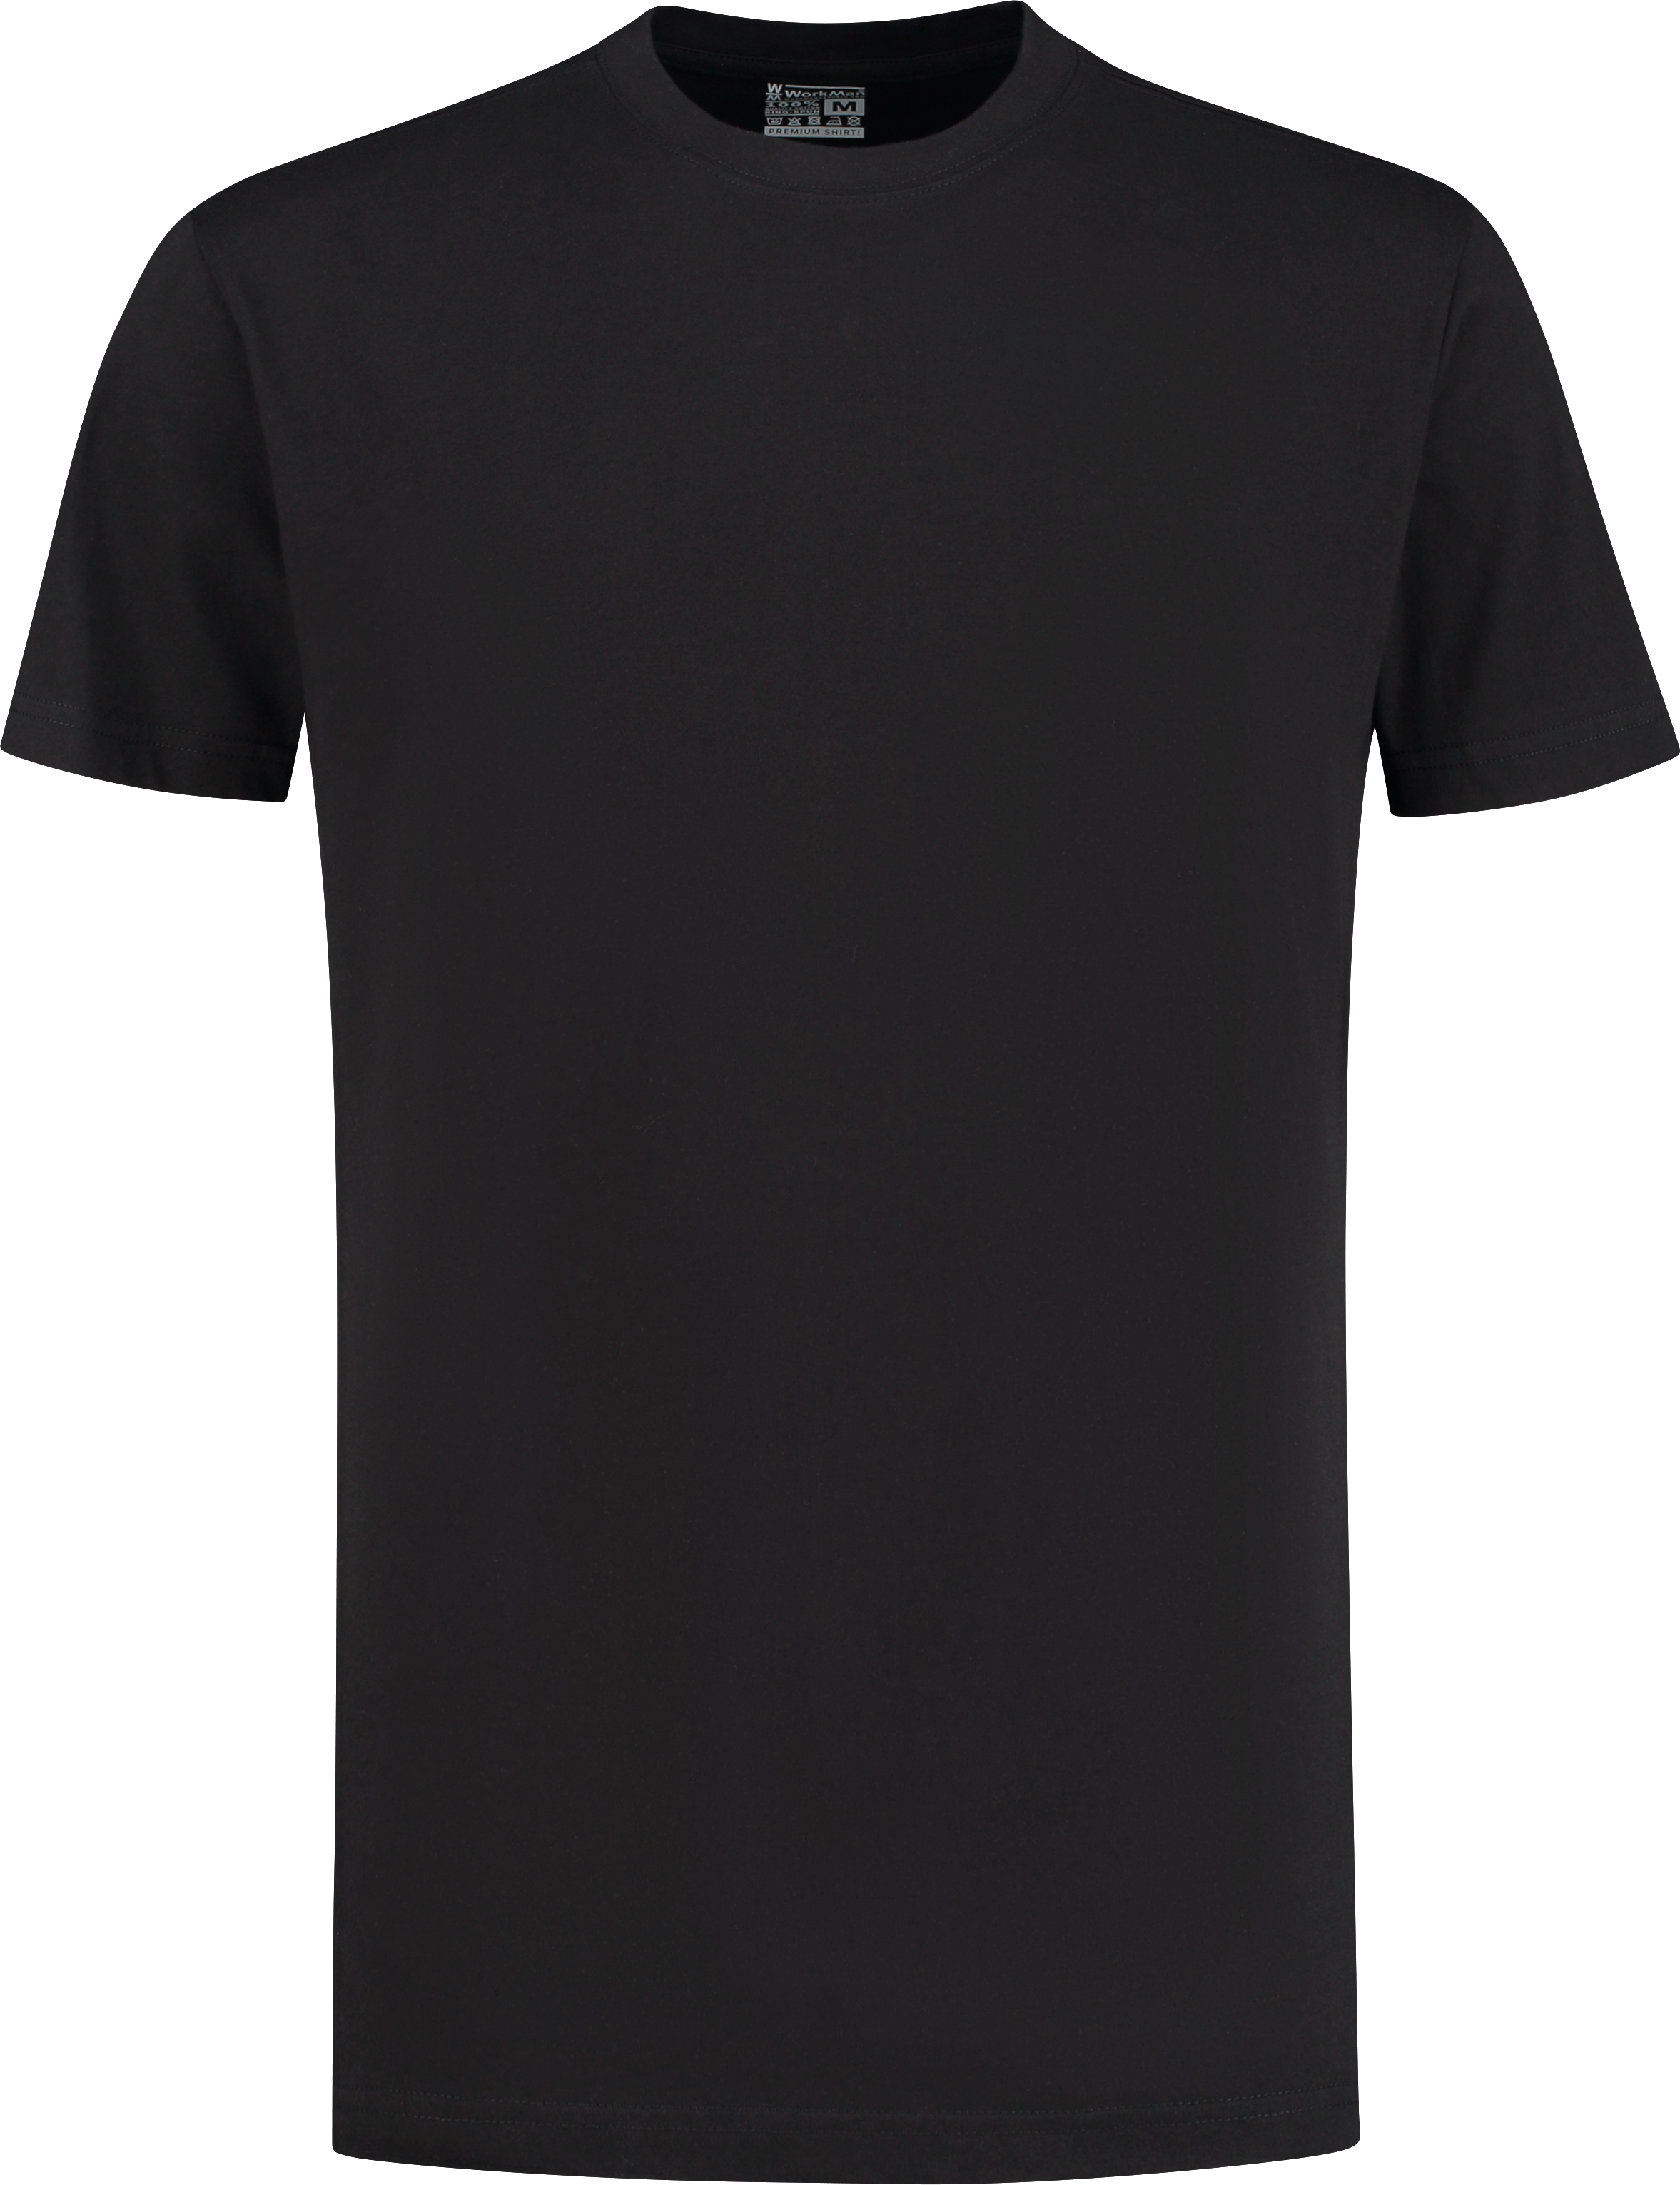 0306 T-Shirt Heavy Duty Black